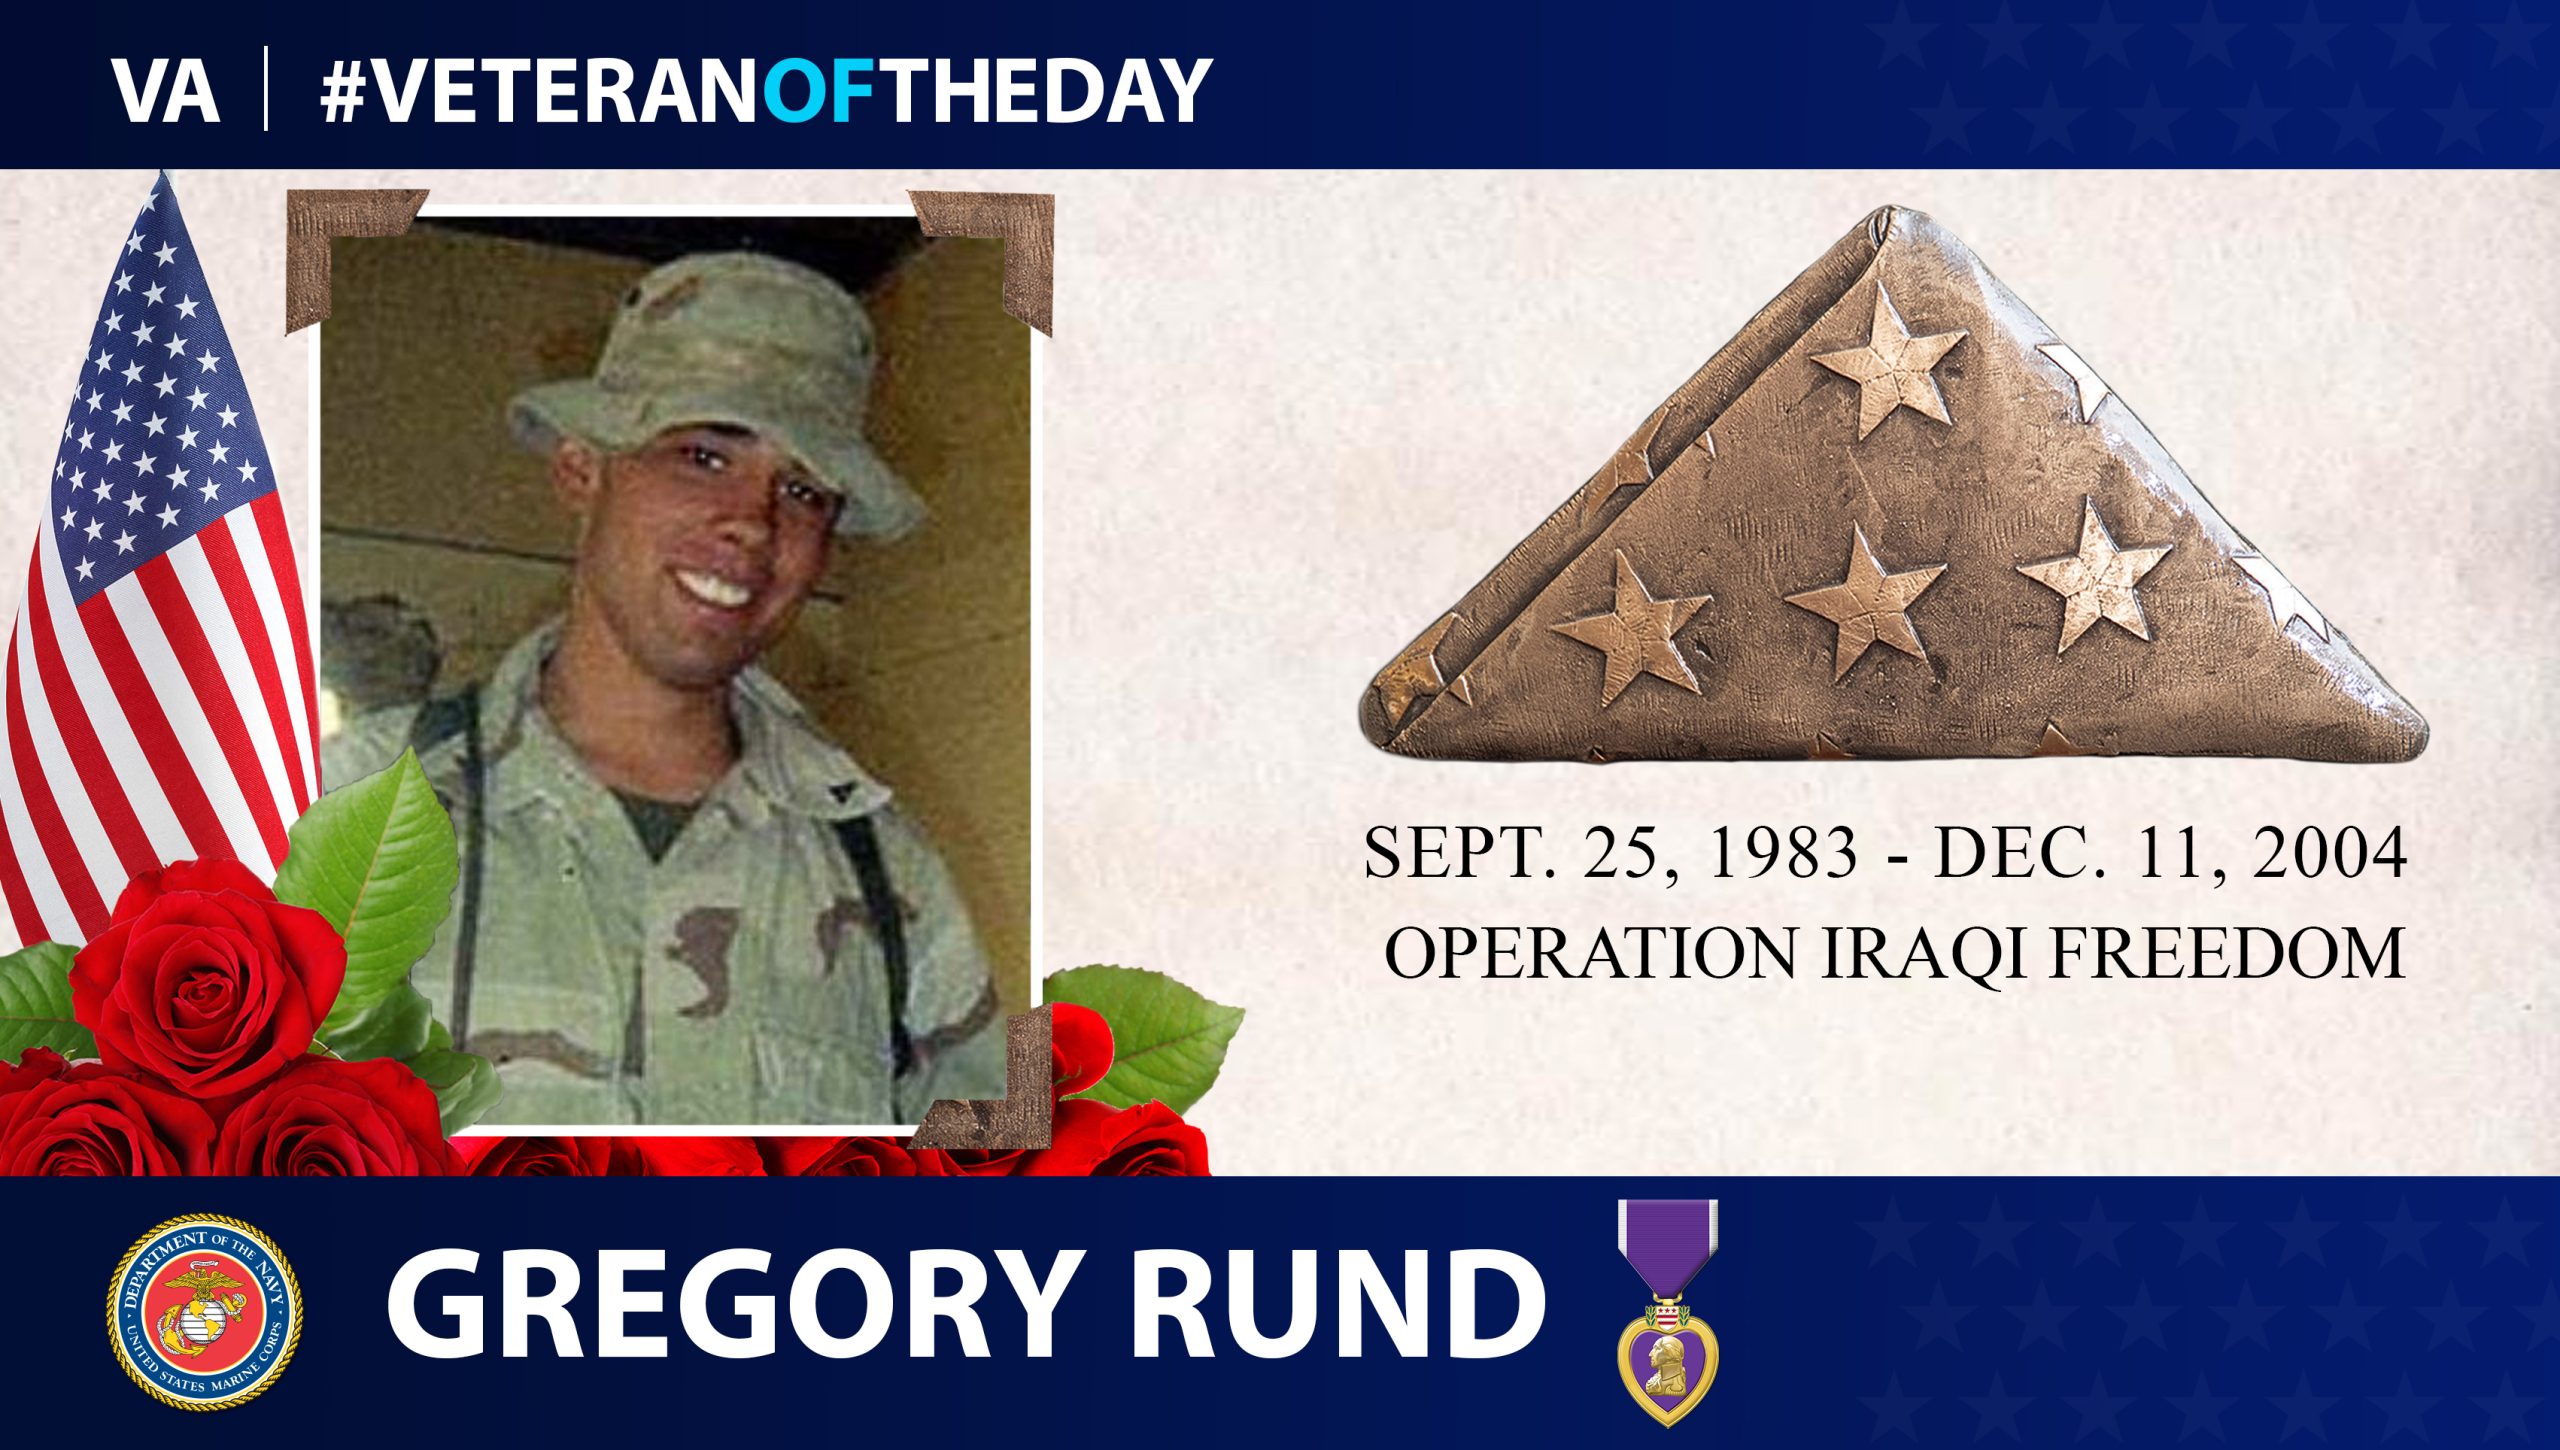 Marine Veteran Gregory Rund is today’s Veteran of the Day.